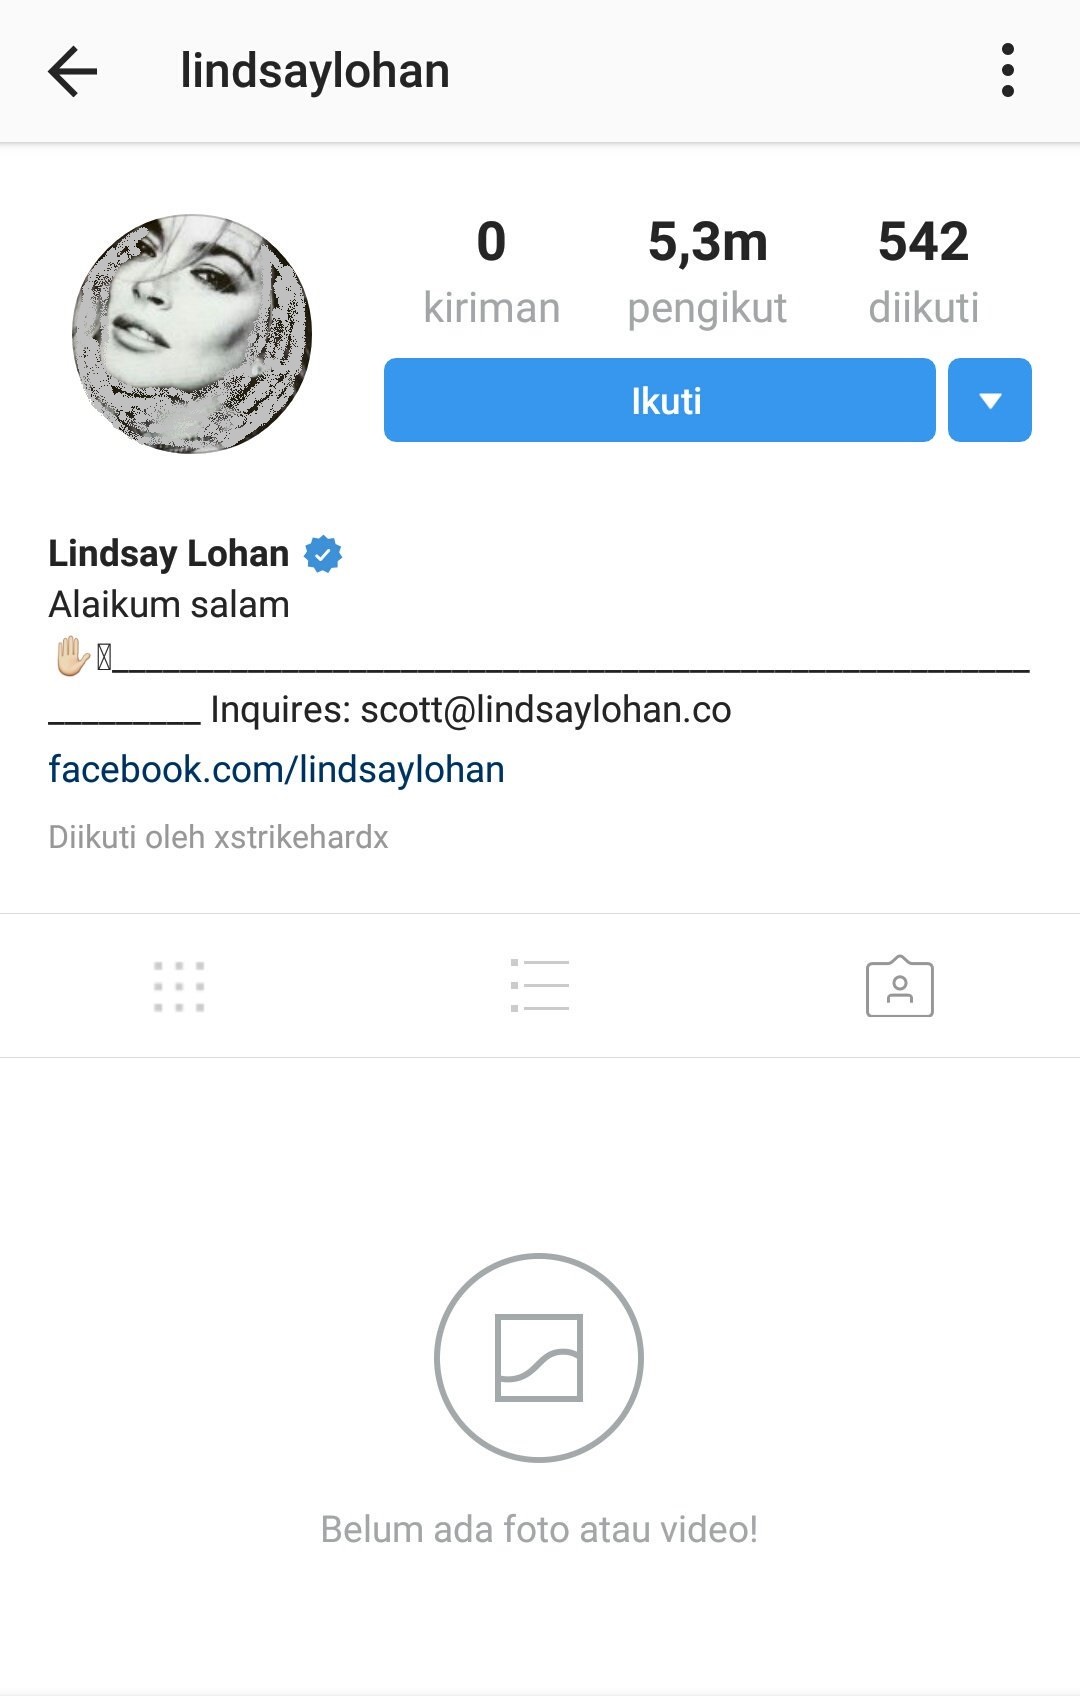 Lindsay Lohan Kembali Diisukan Masuk Islam Setelah Tinggalkan Status